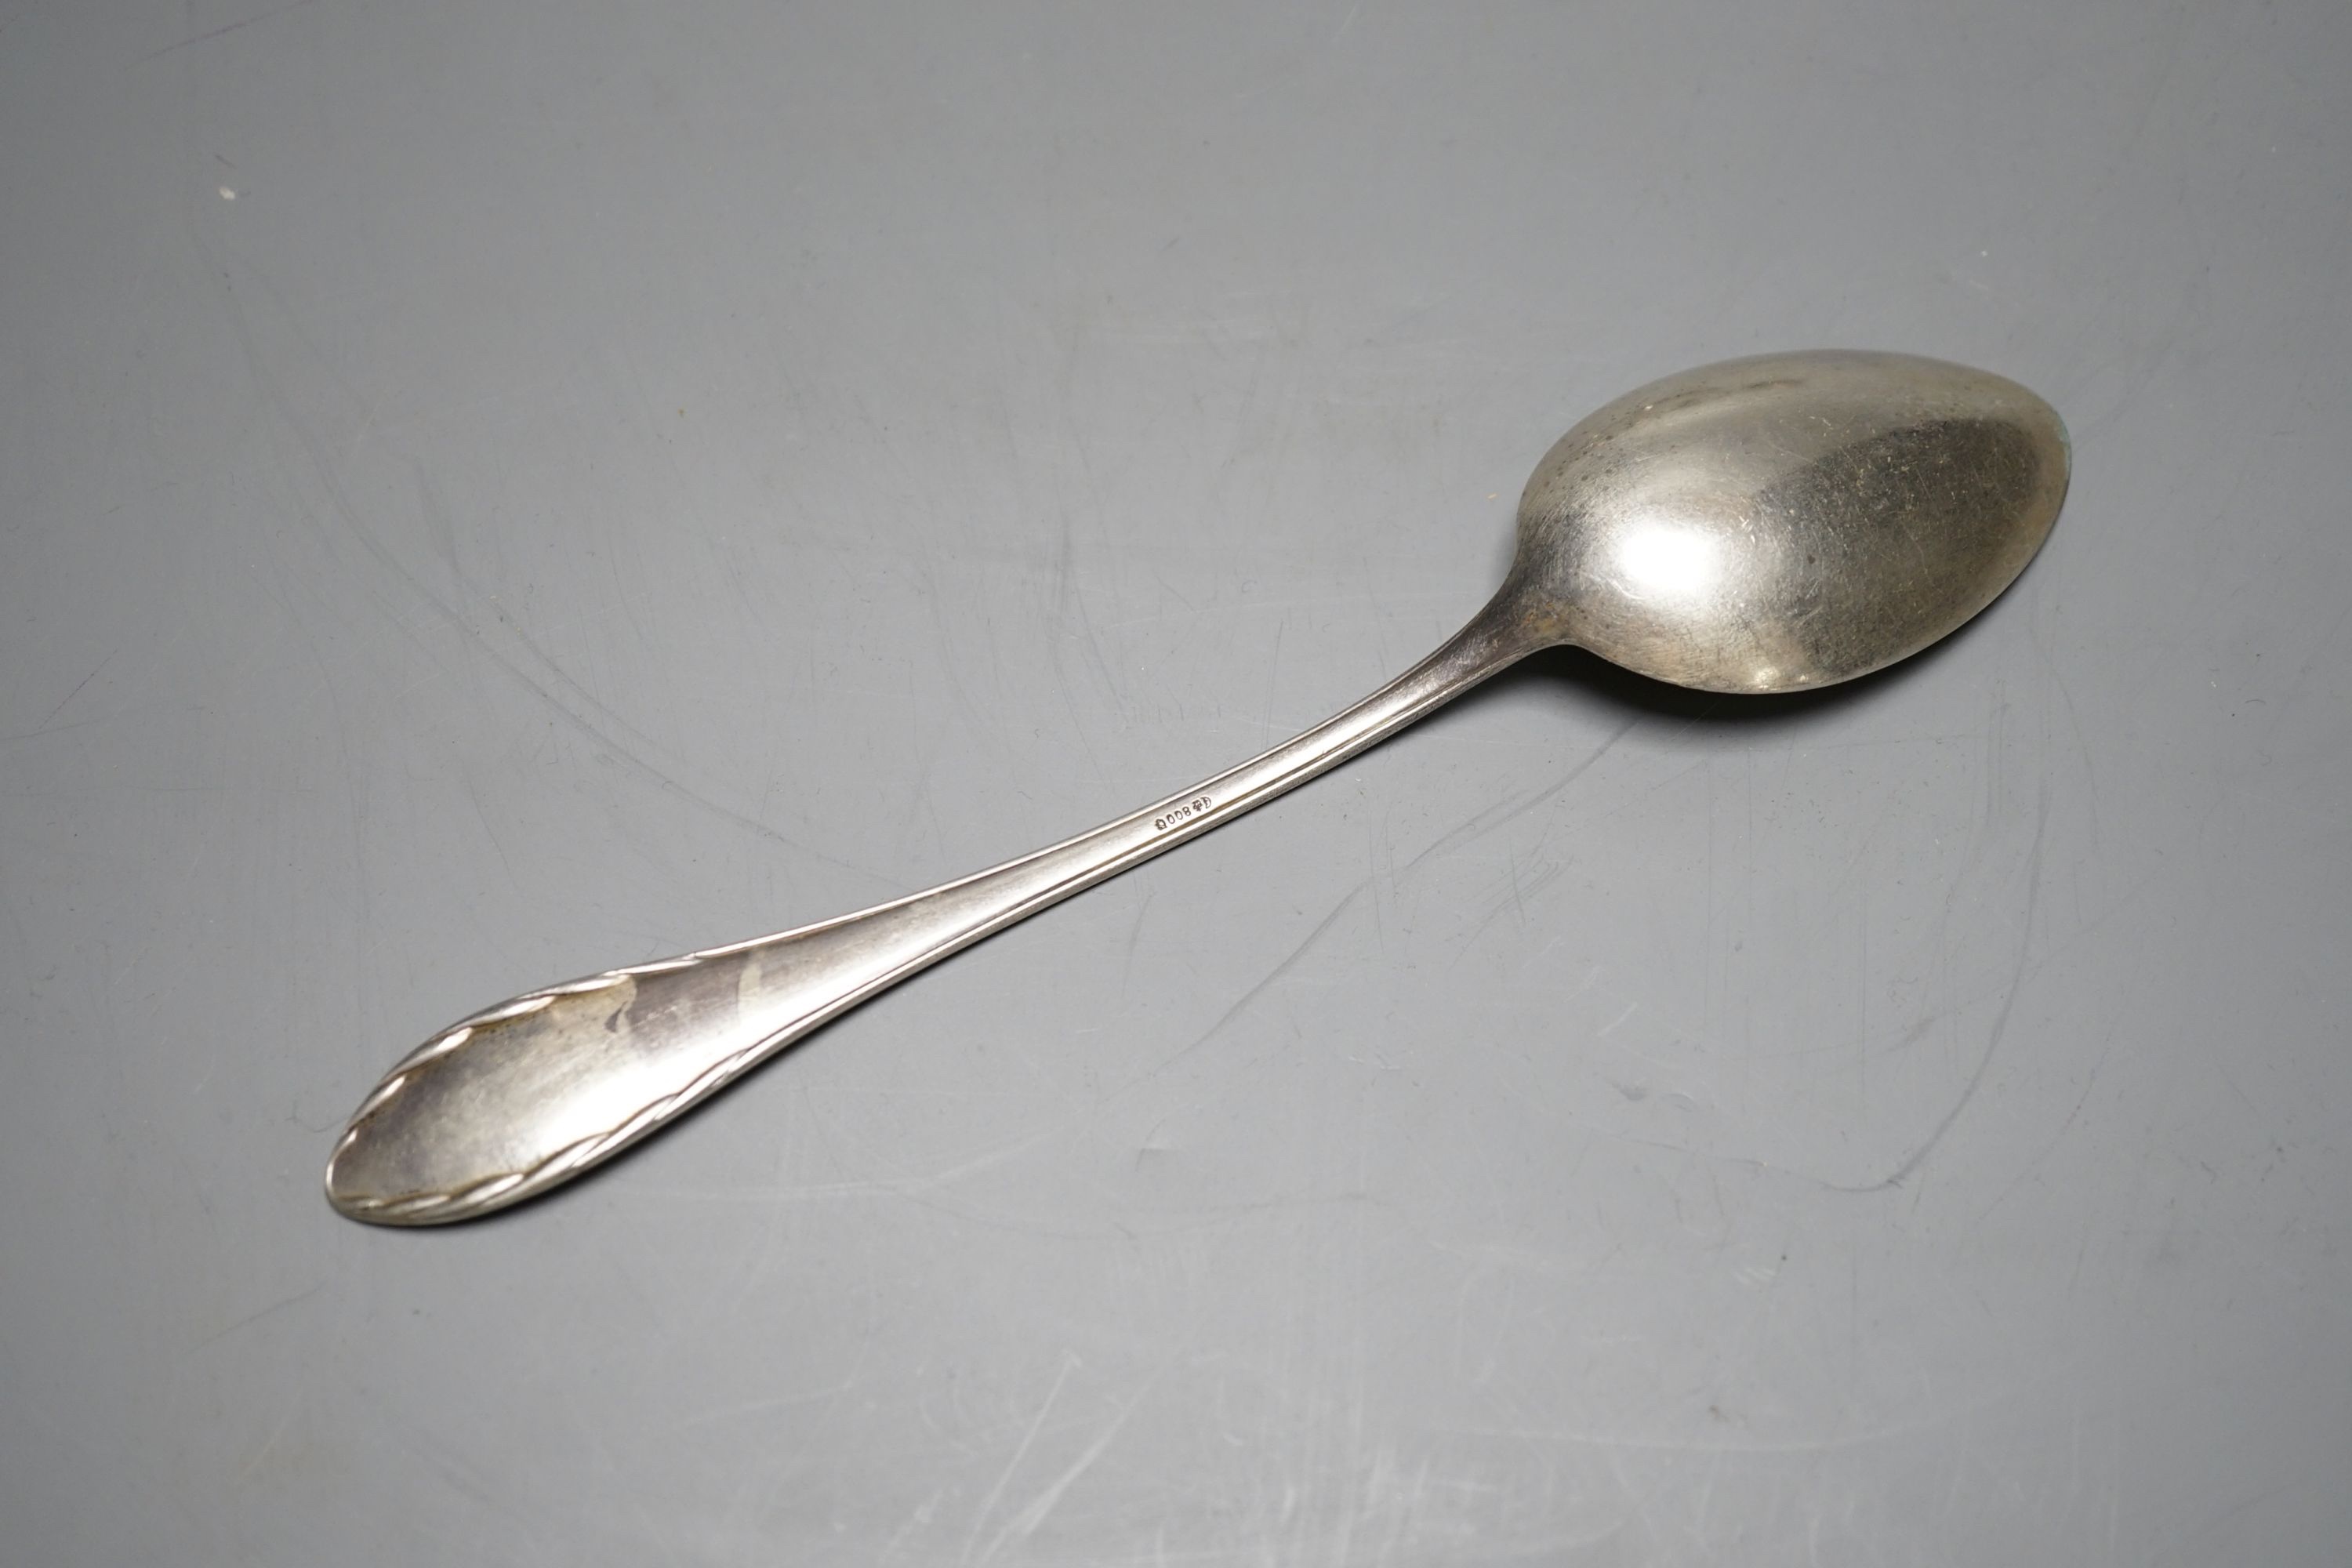 A set of six German 800 standard white metal table spoons, 12oz.